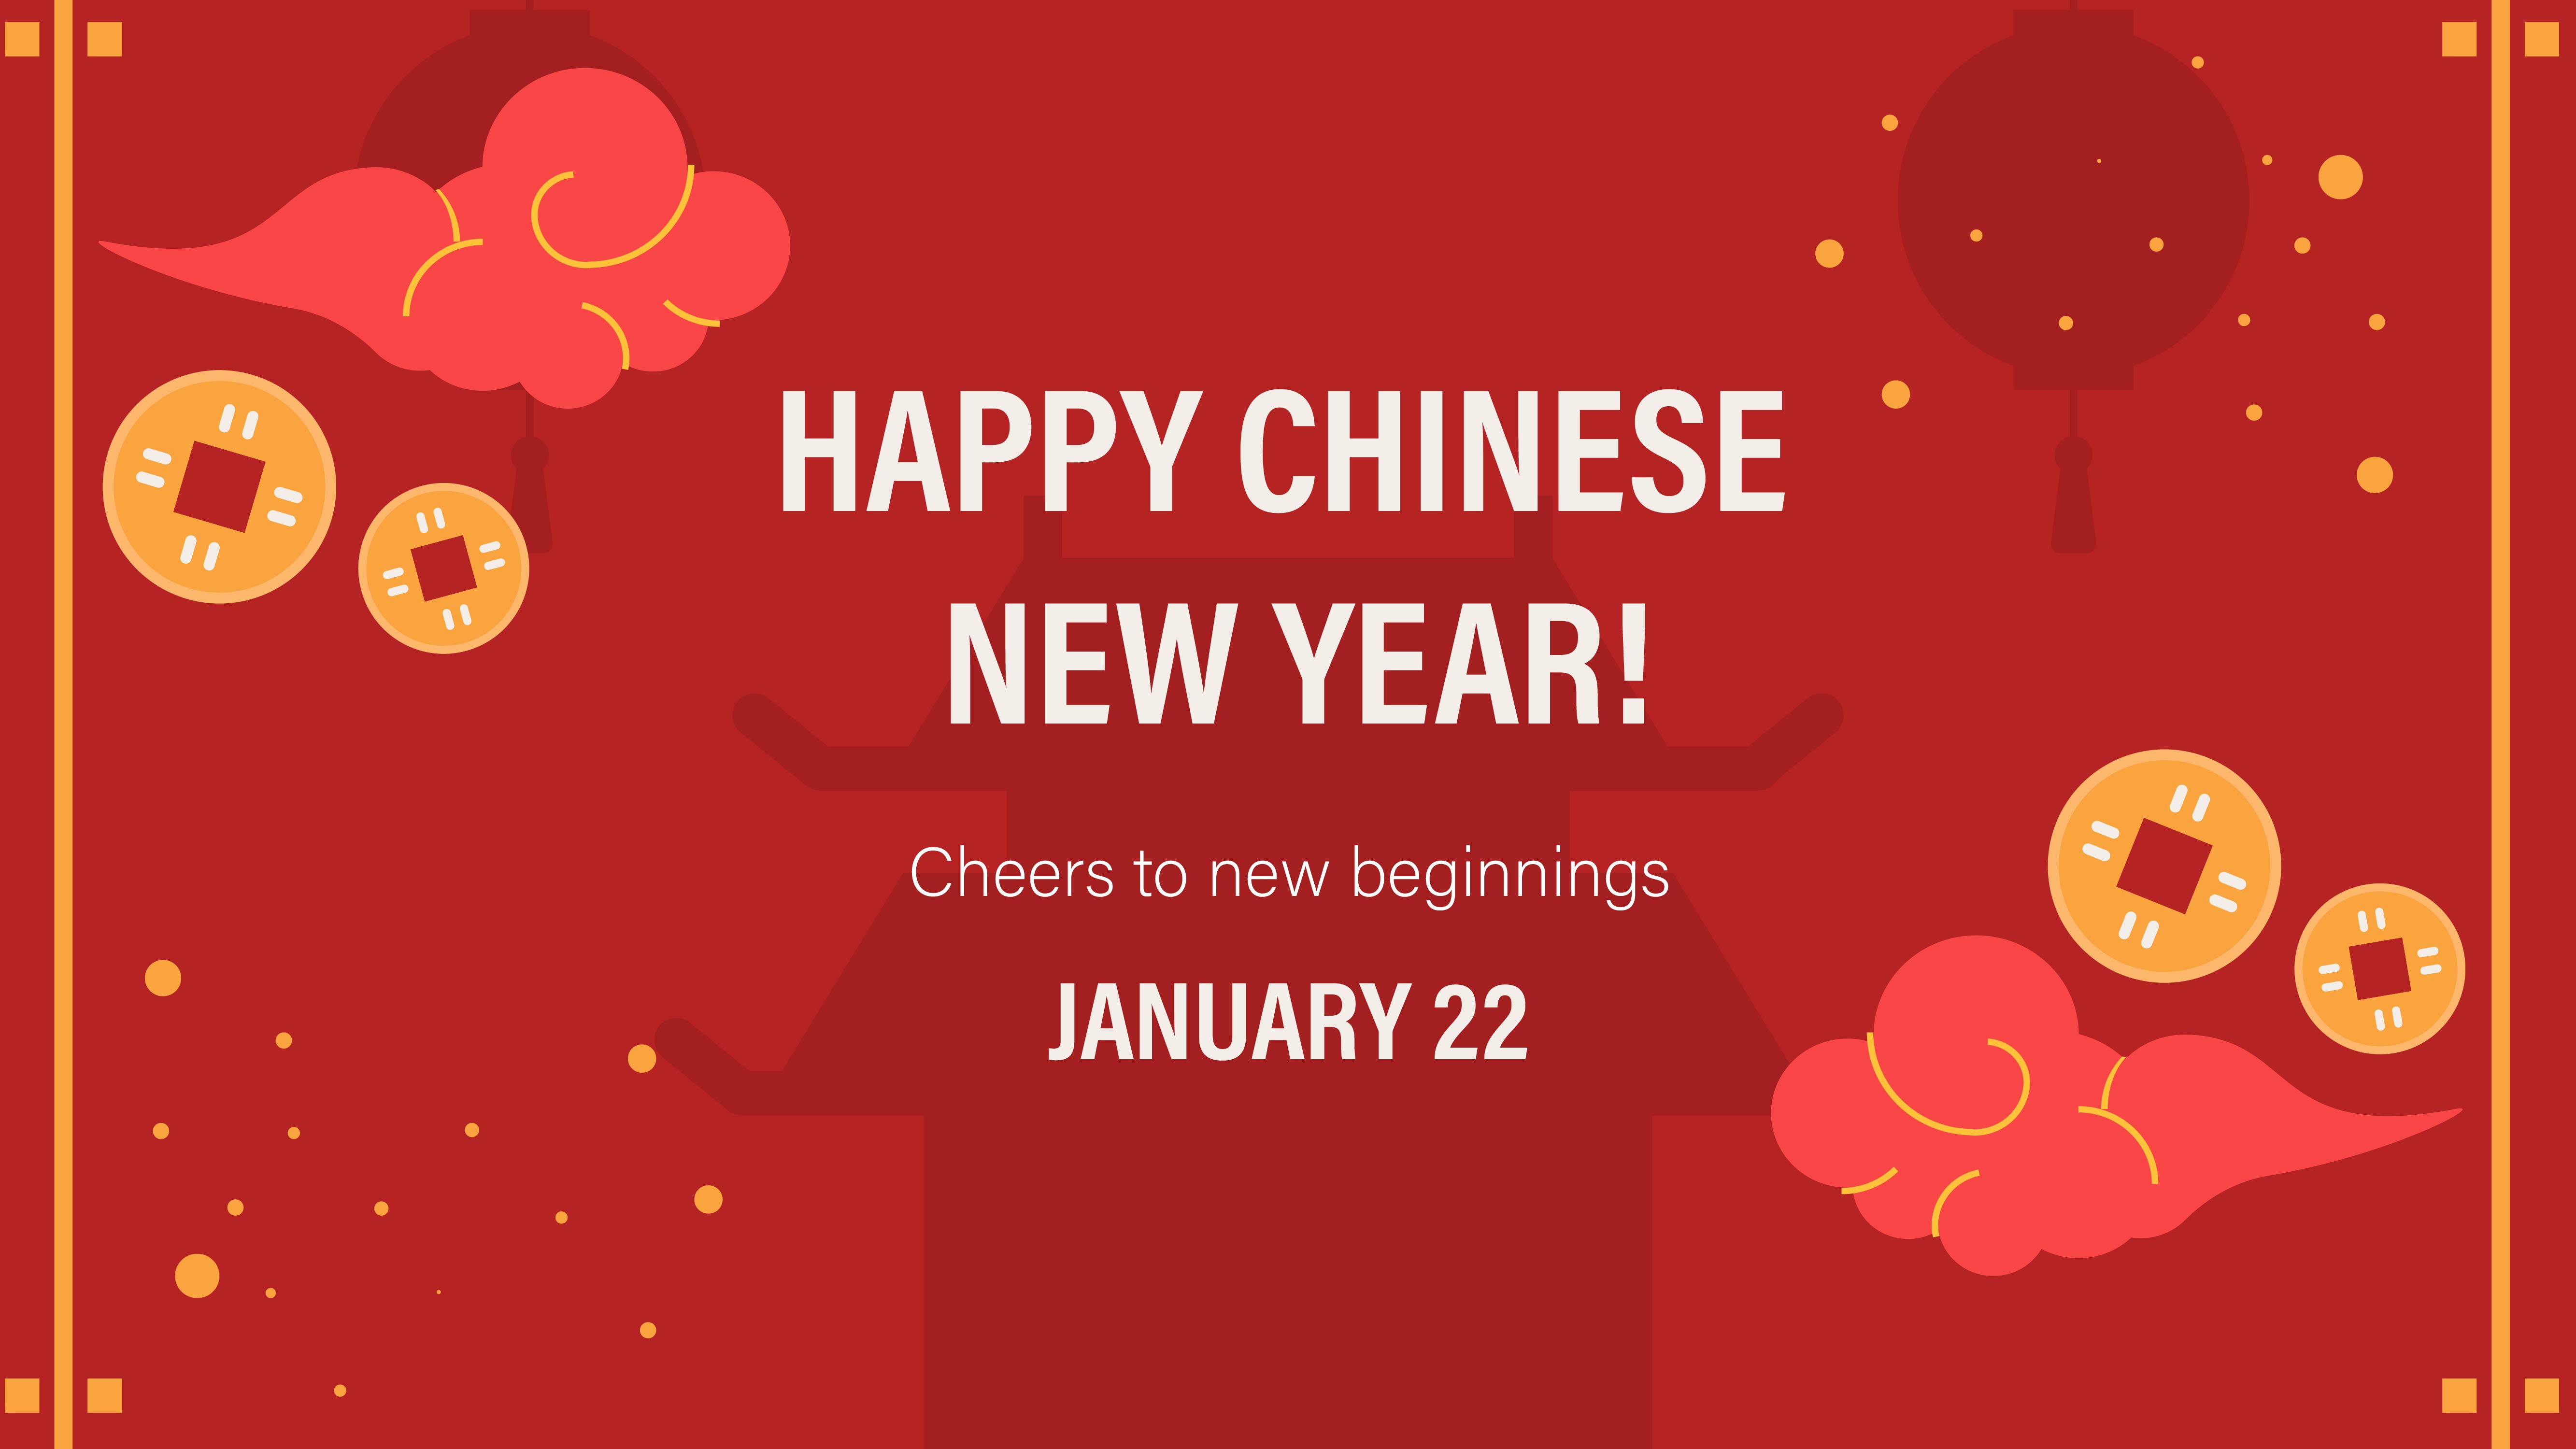 Free custom printable Lunar New Year card templates